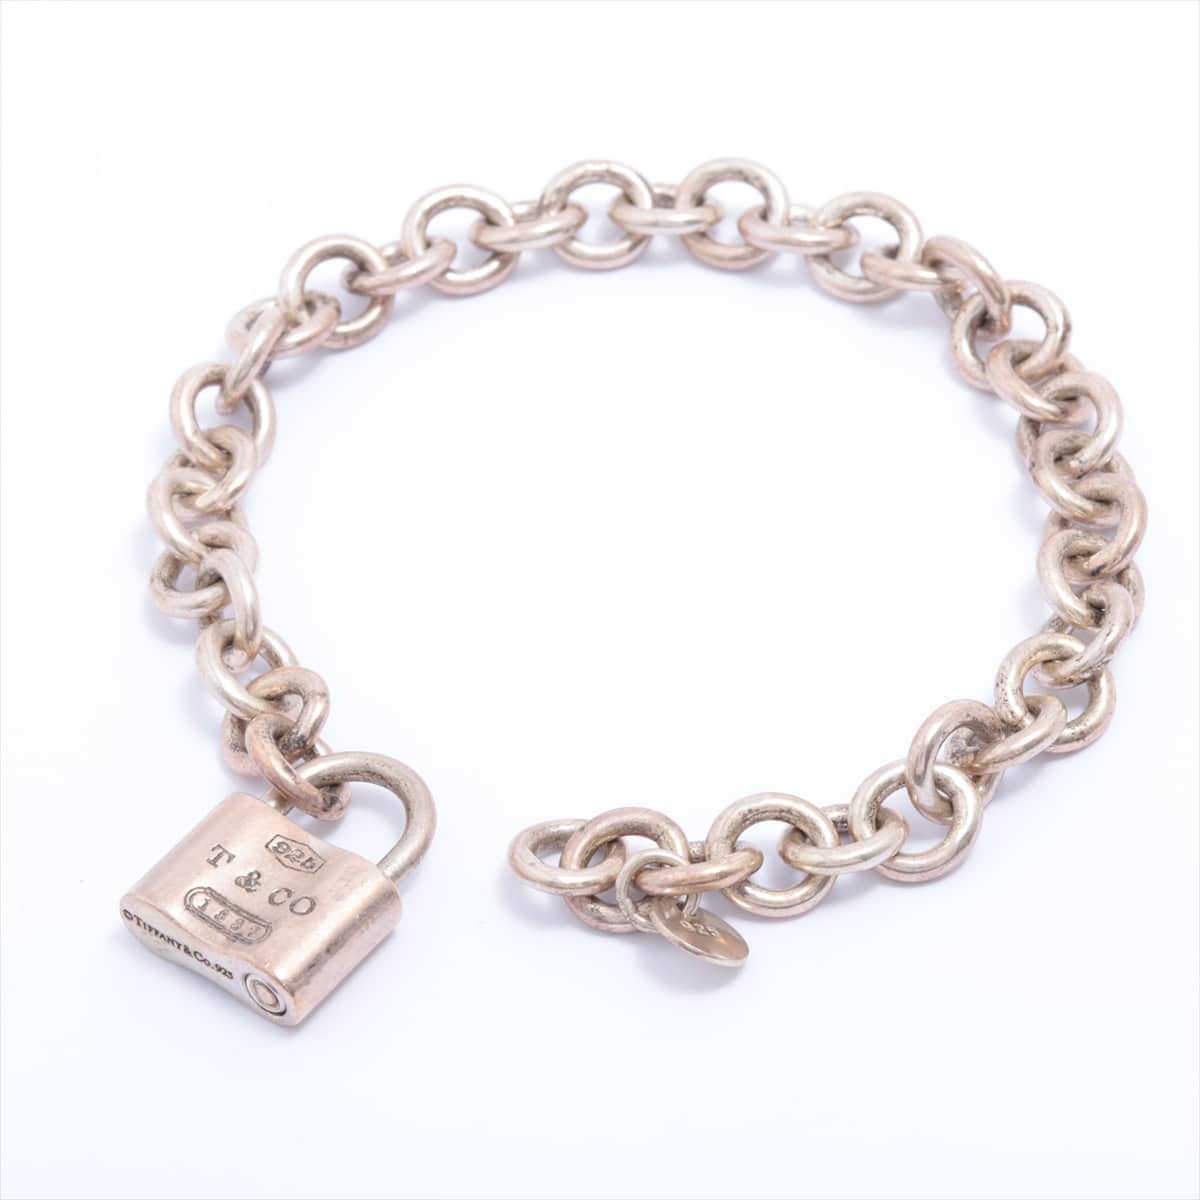 Tiffany Cadena lock Bracelet 925 25.8g Silver